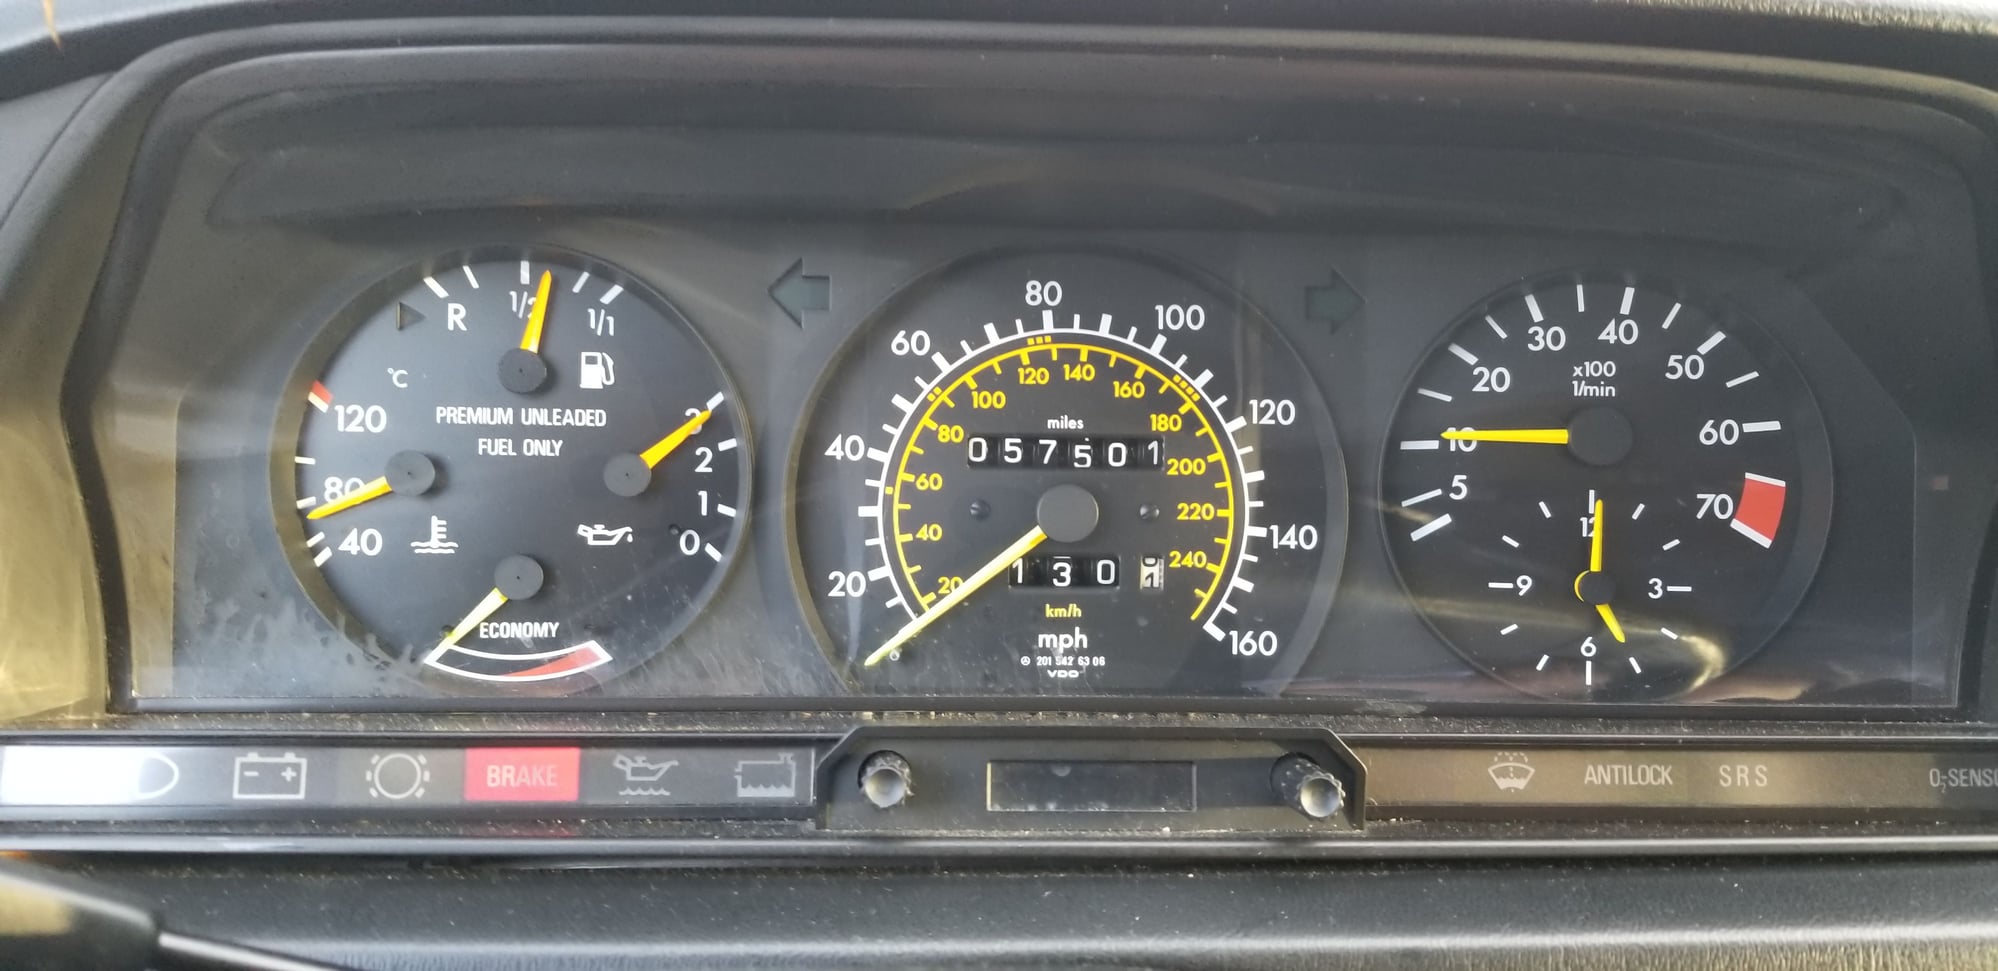 1987 Mercedes-Benz 190E - 1987 190e Cosworth 2.3 - Used - VIN WDBDA34D5HF385673 - 57,501 Miles - 4 cyl - 2WD - Manual - Sedan - Black - Sandy Hook, CT 06482, United States